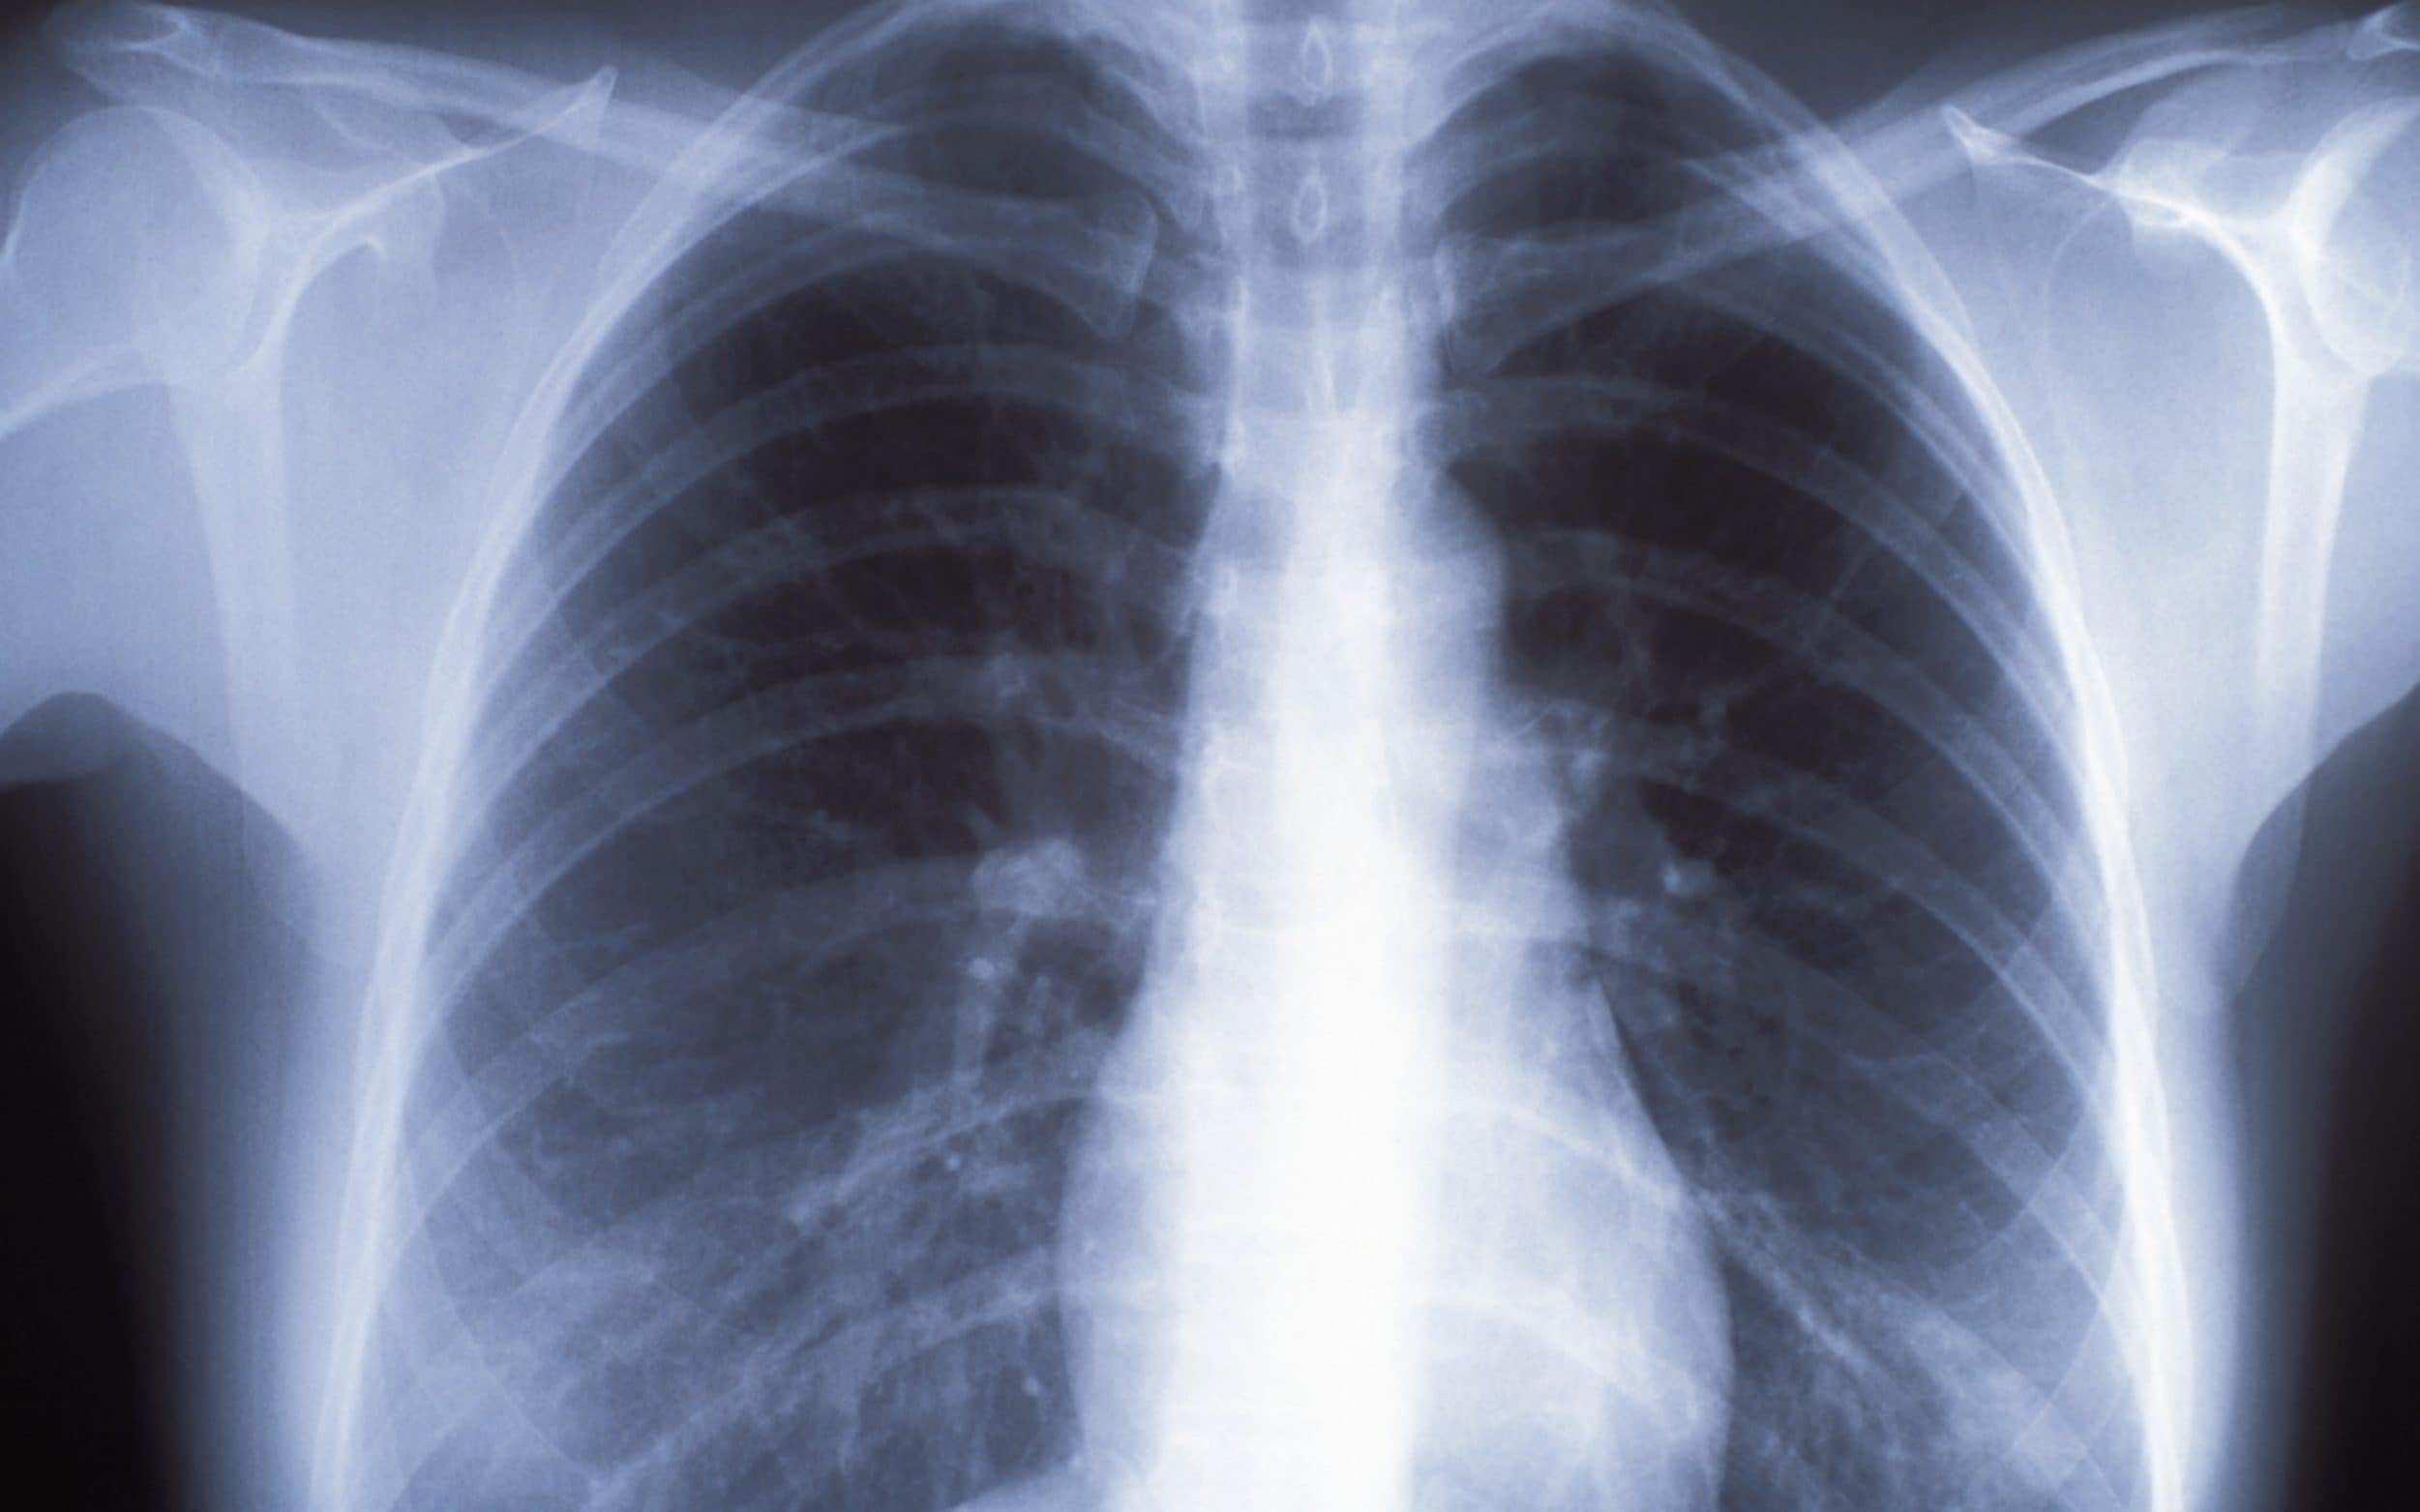 Rajos X pulmons